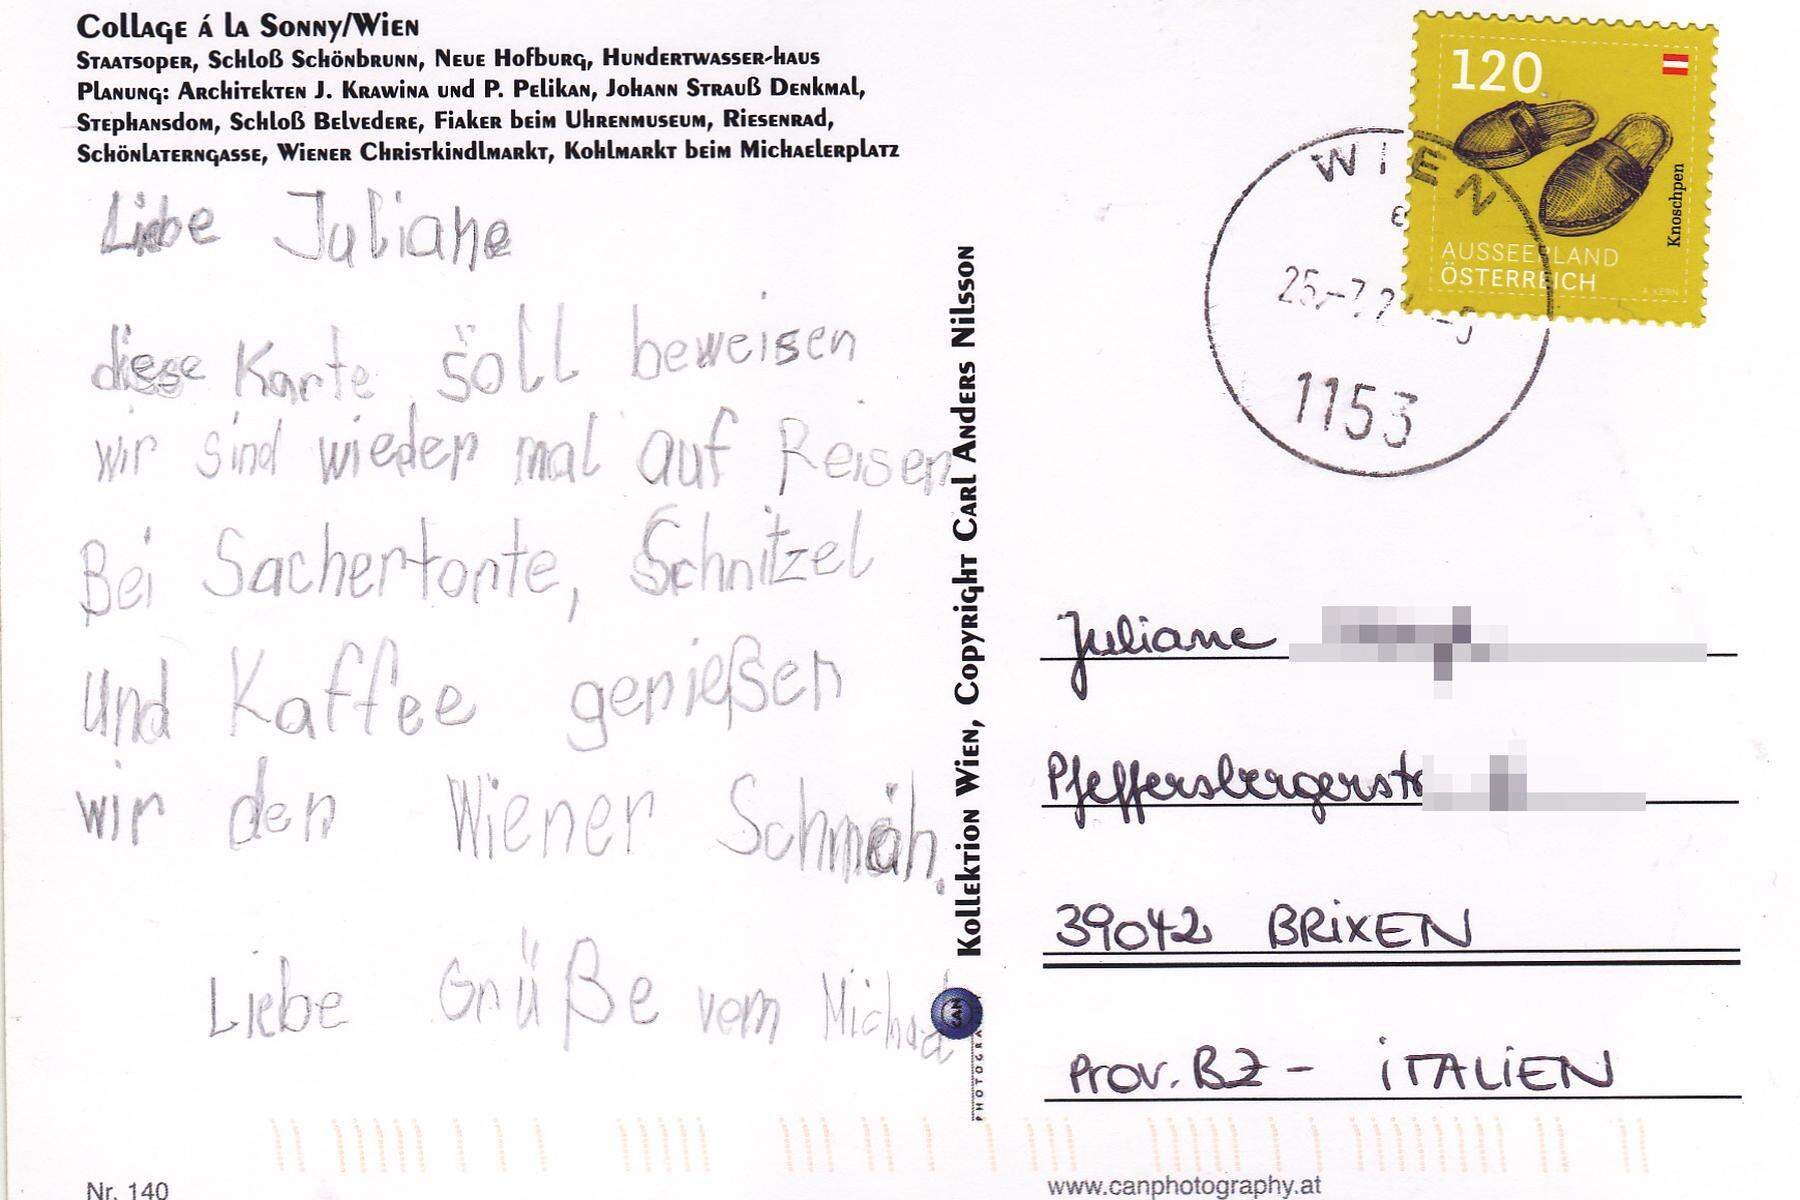 „Liebe Juliane“: Verirrte Postkarte landete in Graz anstatt in Brixen